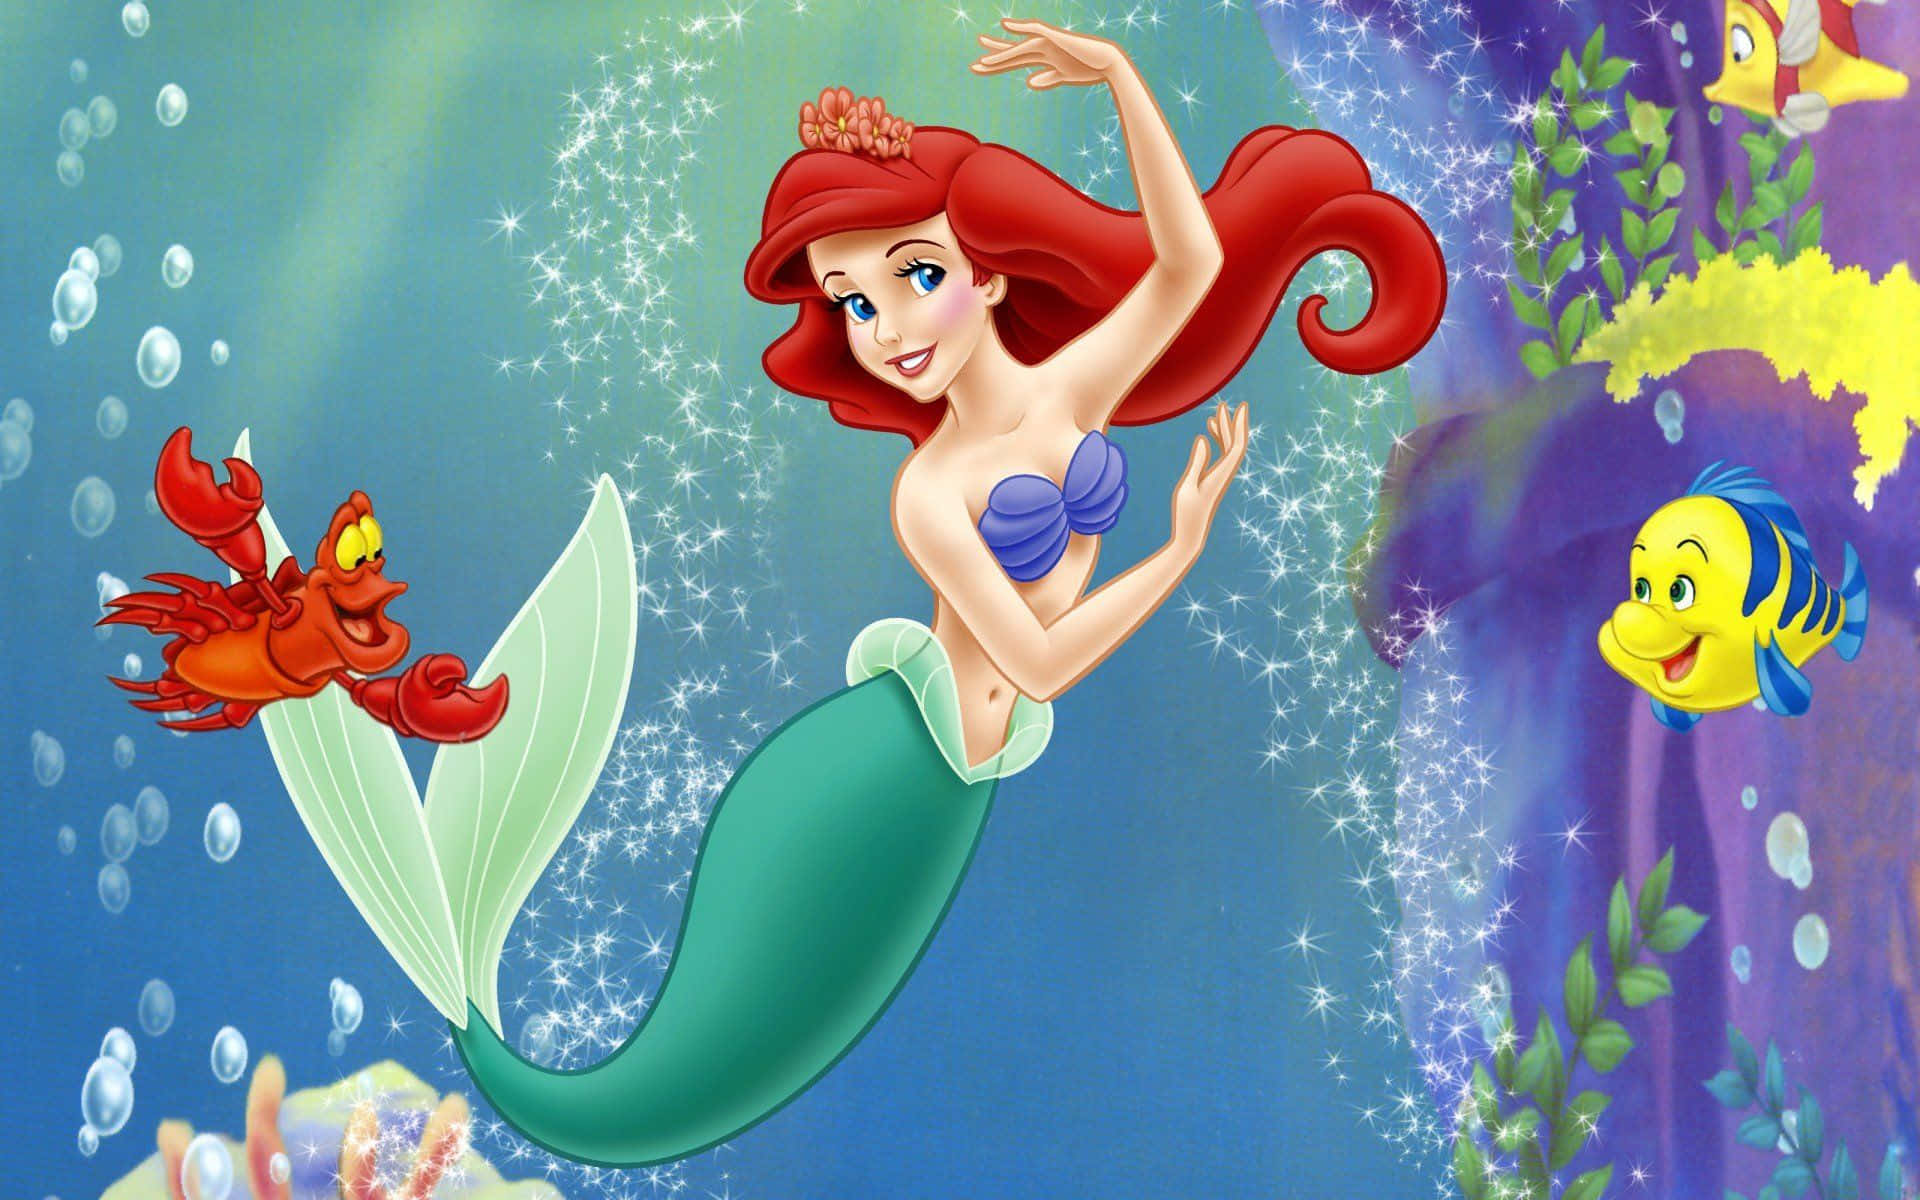 Ariel the Little Mermaid Explores the Unfathomed Depths Wallpaper